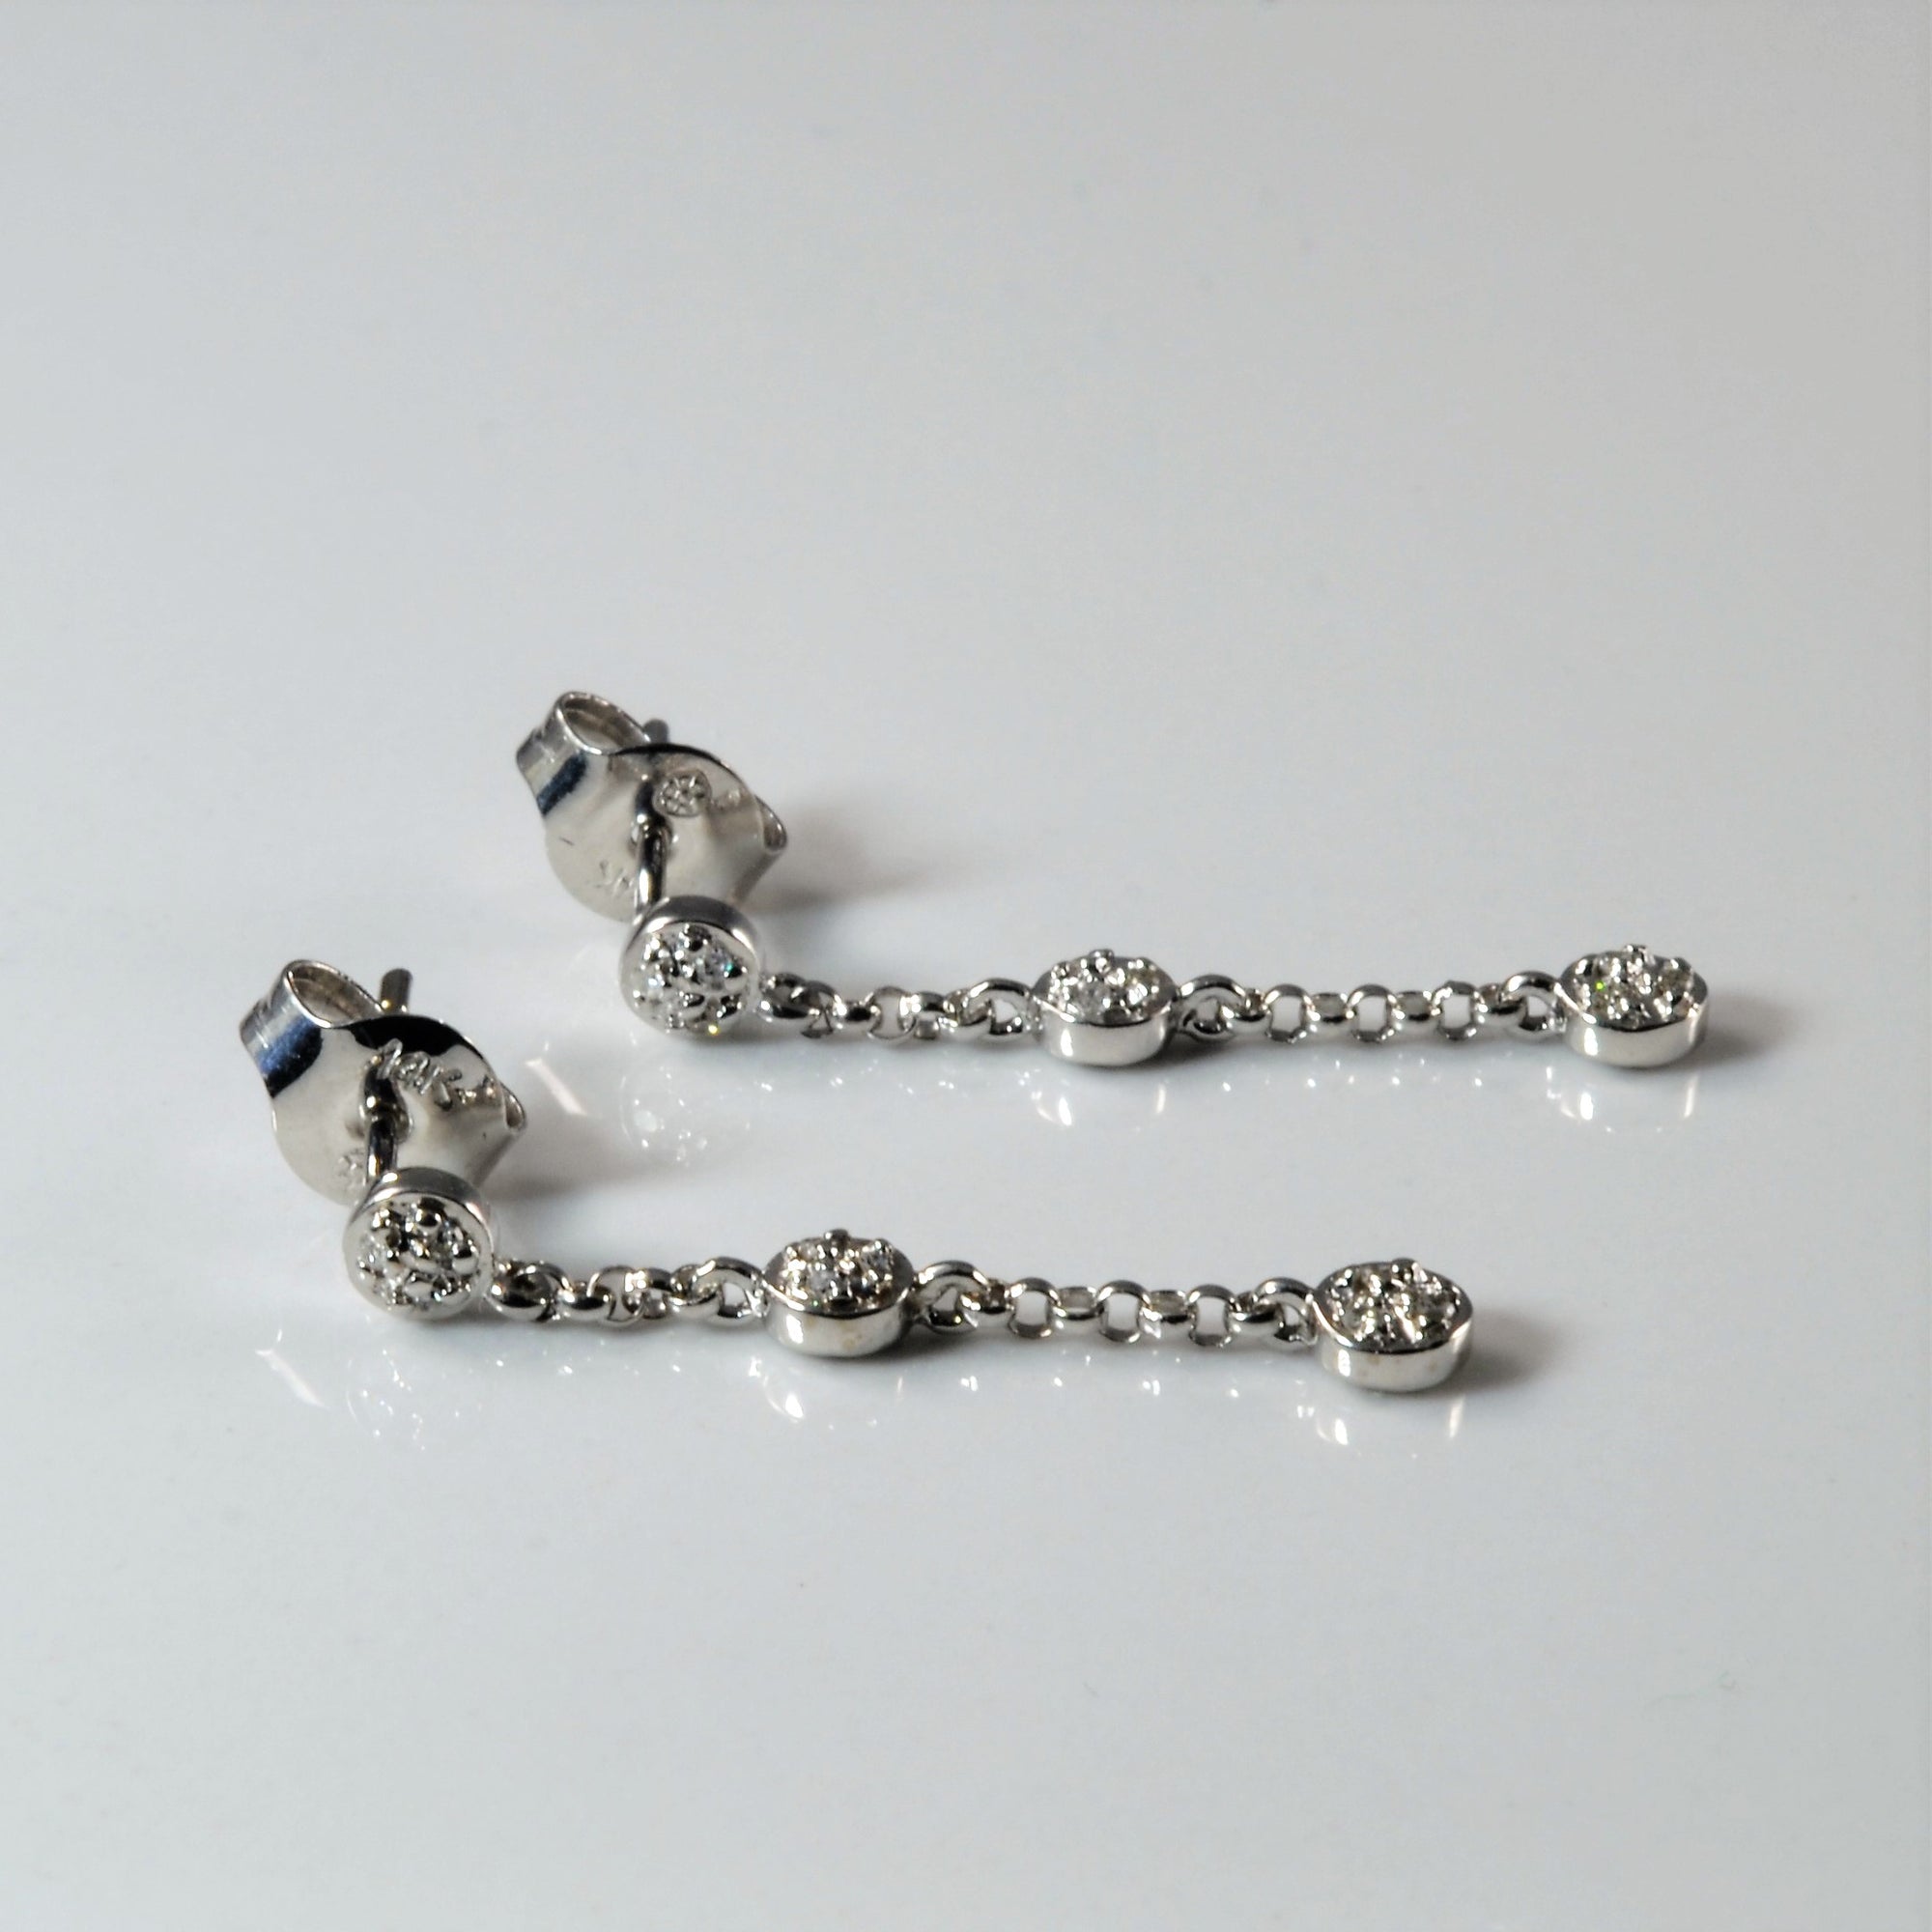 Pave Diamond Cluster Drop Earrings | 0.06ctw |